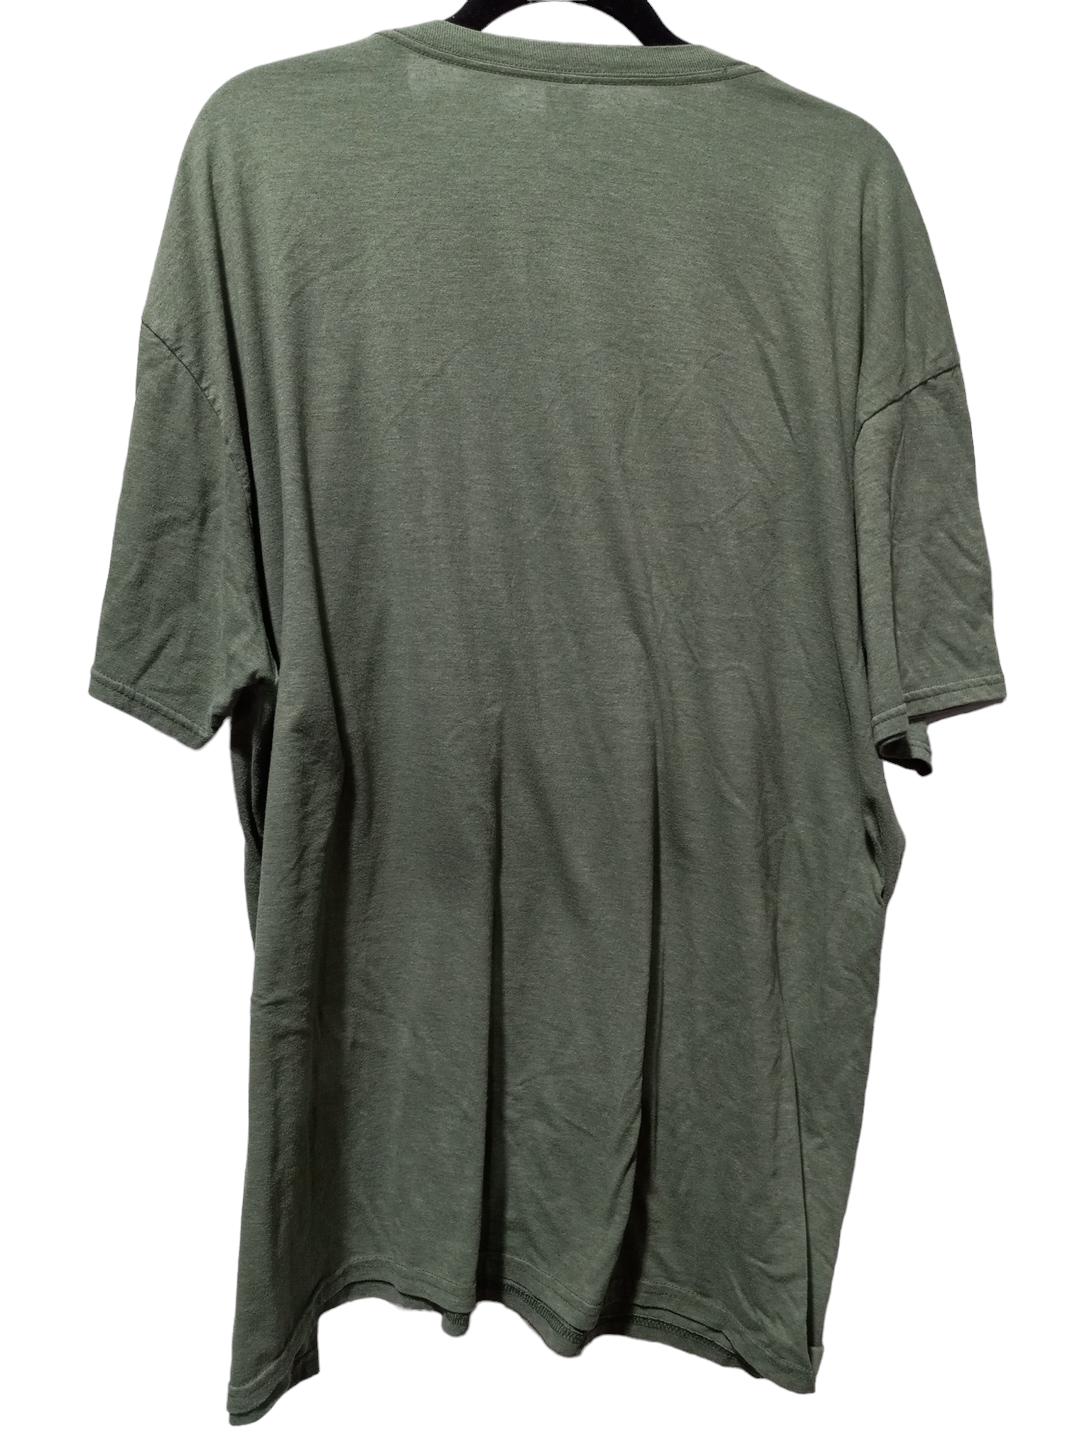 Green Top Short Sleeve Gildan, Size 3x